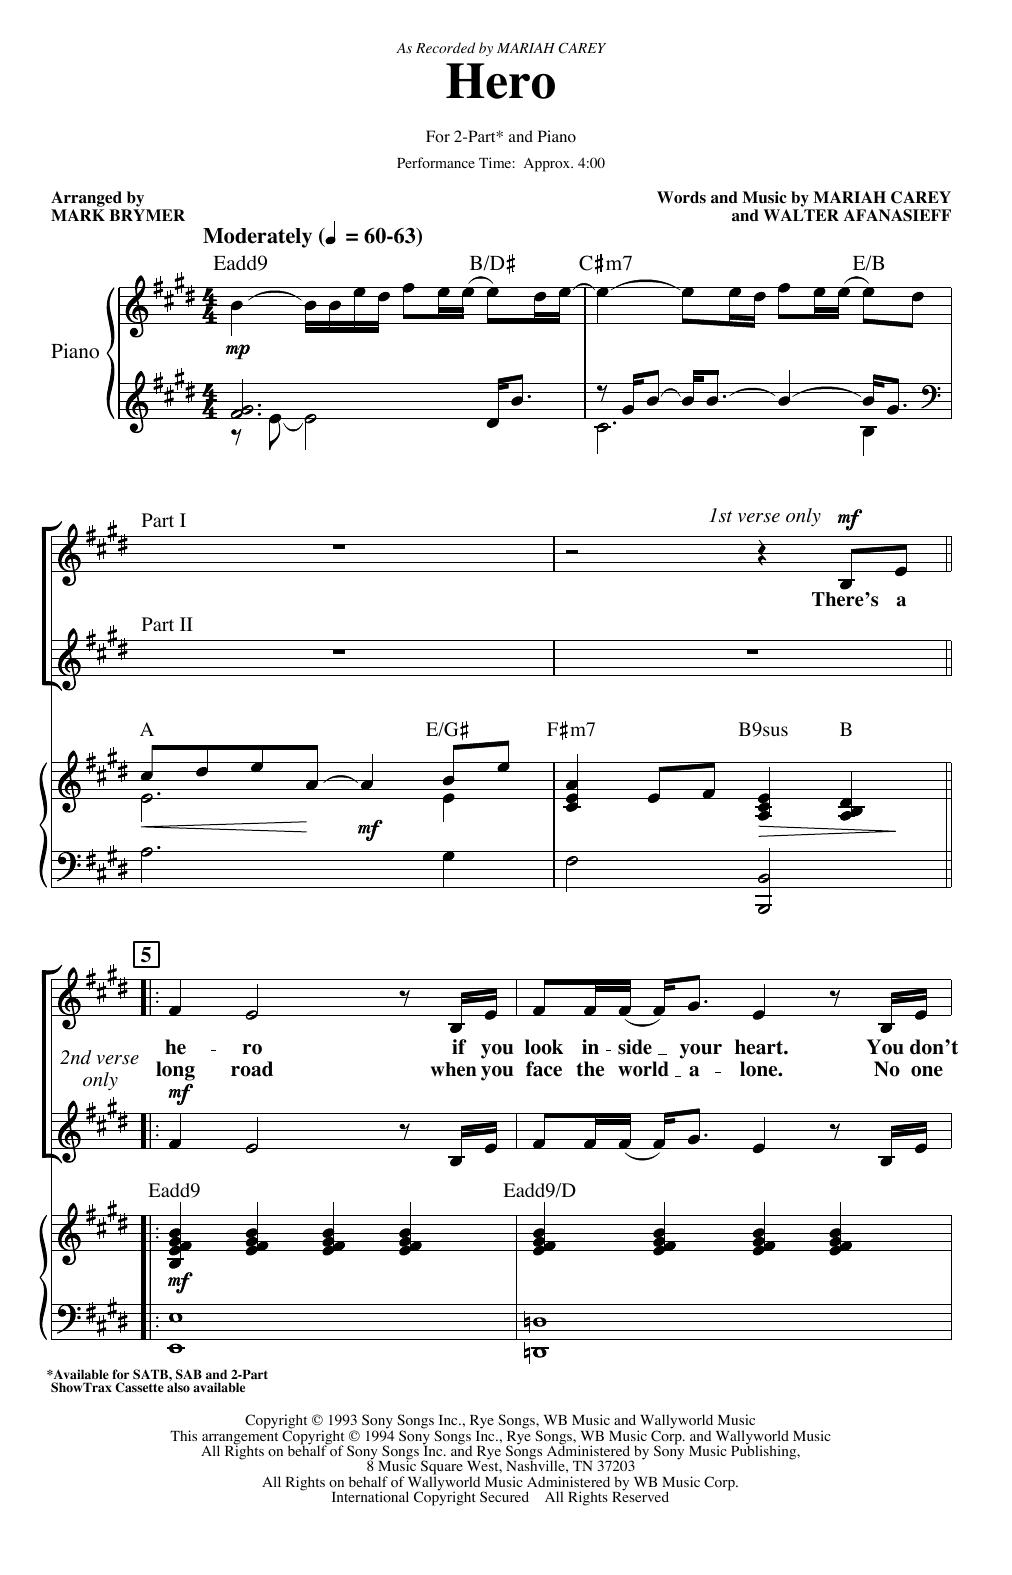 Mariah Carey Hero (arr. Mark Brymer) Sheet Music Notes & Chords for SATB Choir - Download or Print PDF